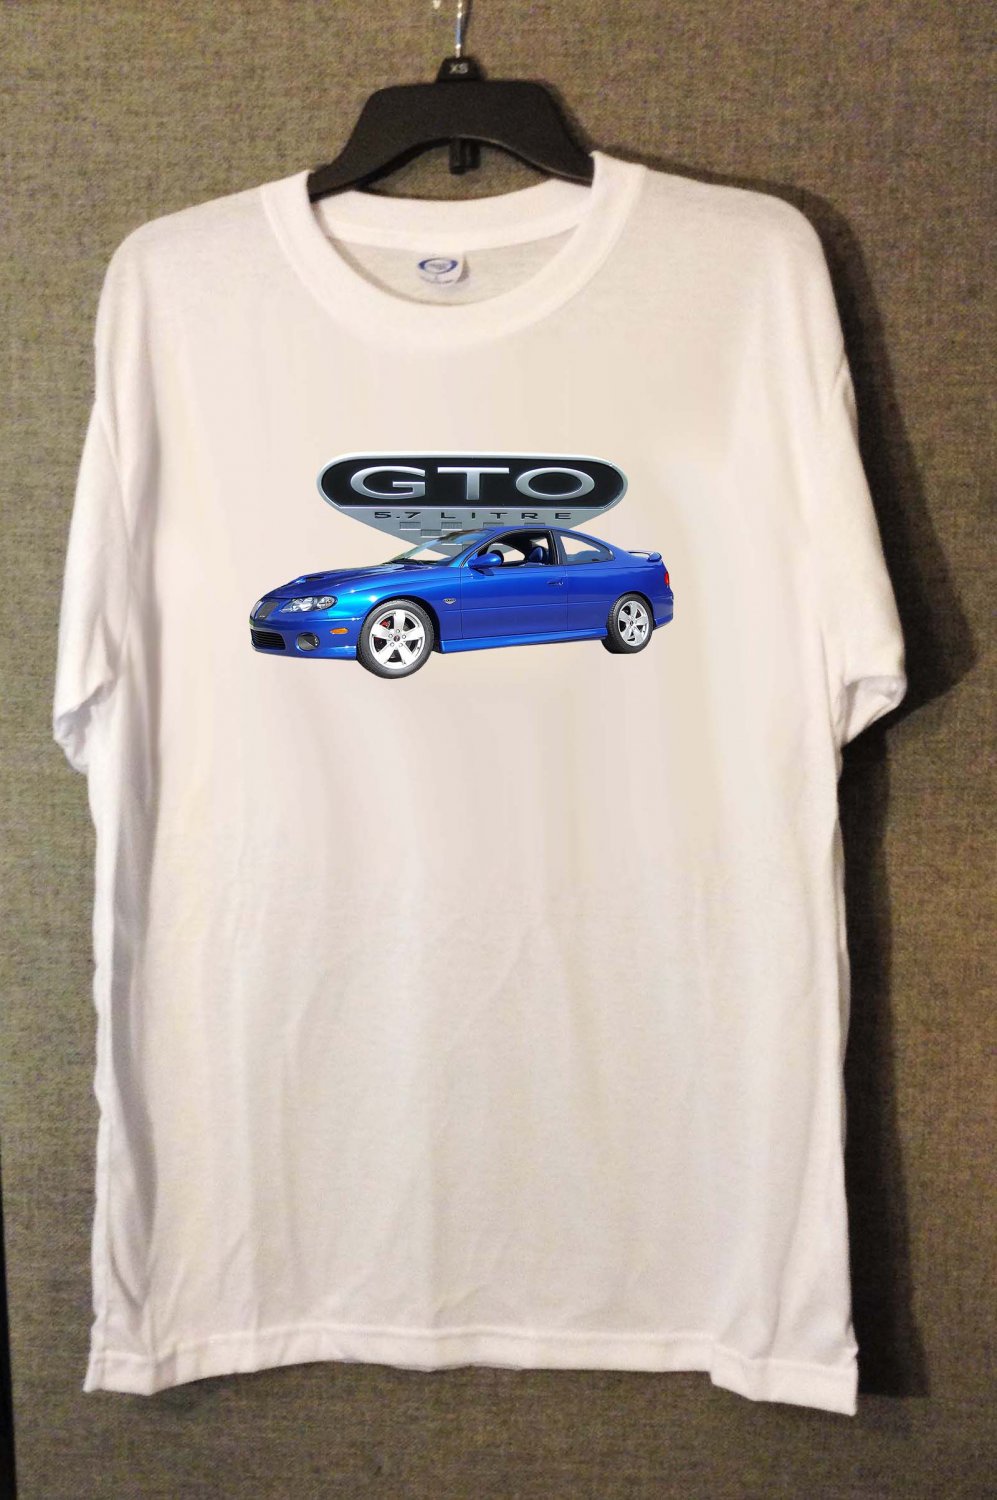 New 2005 Pontiac GTO white T-shirt